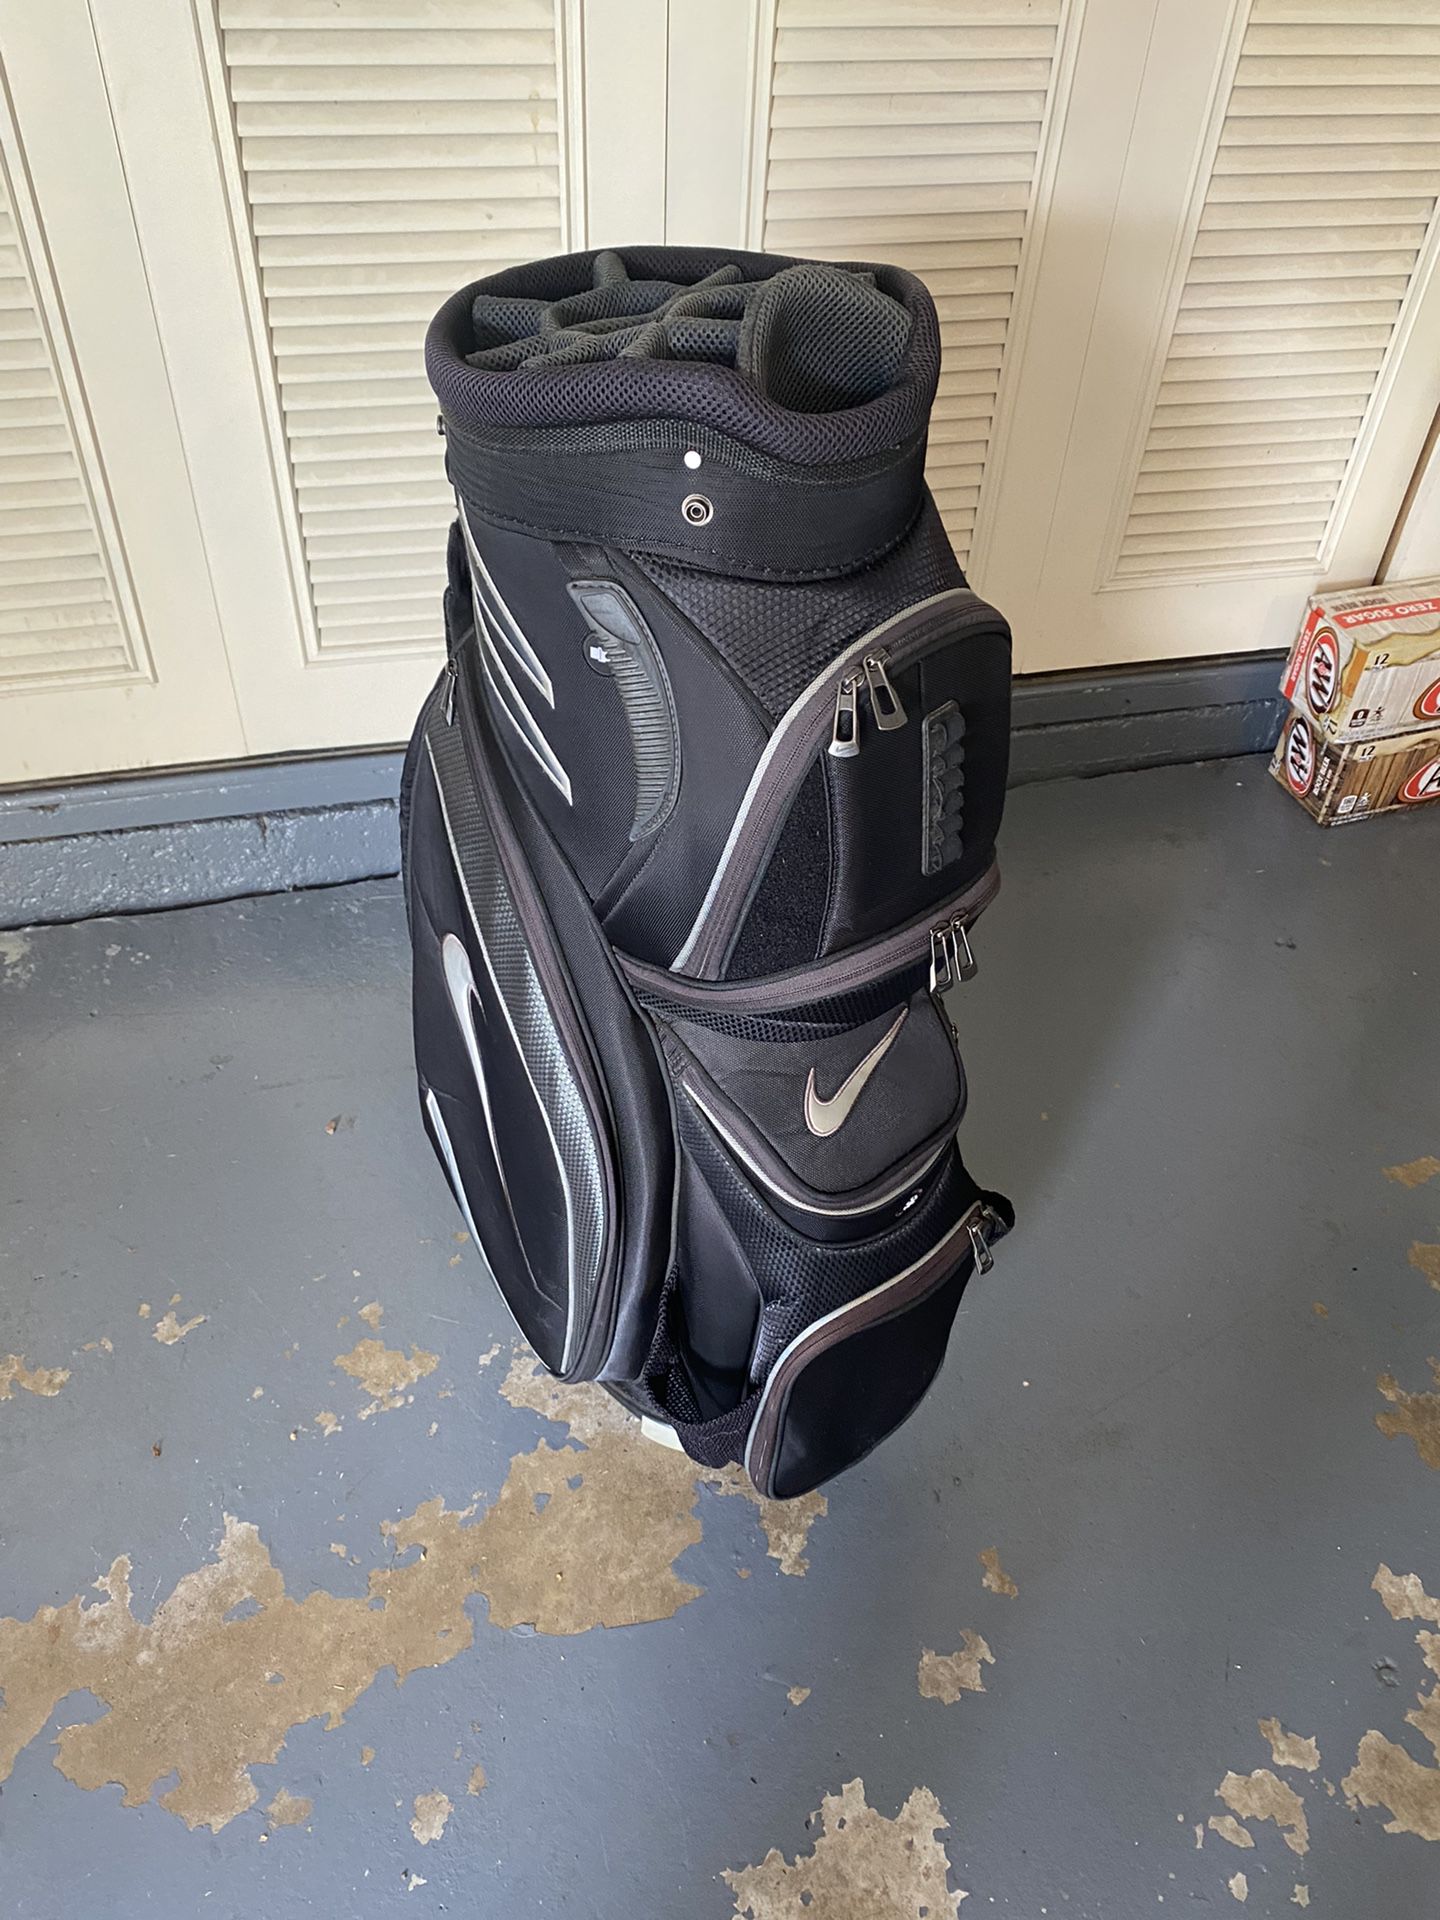 Nike Golf Bag Used for Sale in Marlboro, NJ OfferUp